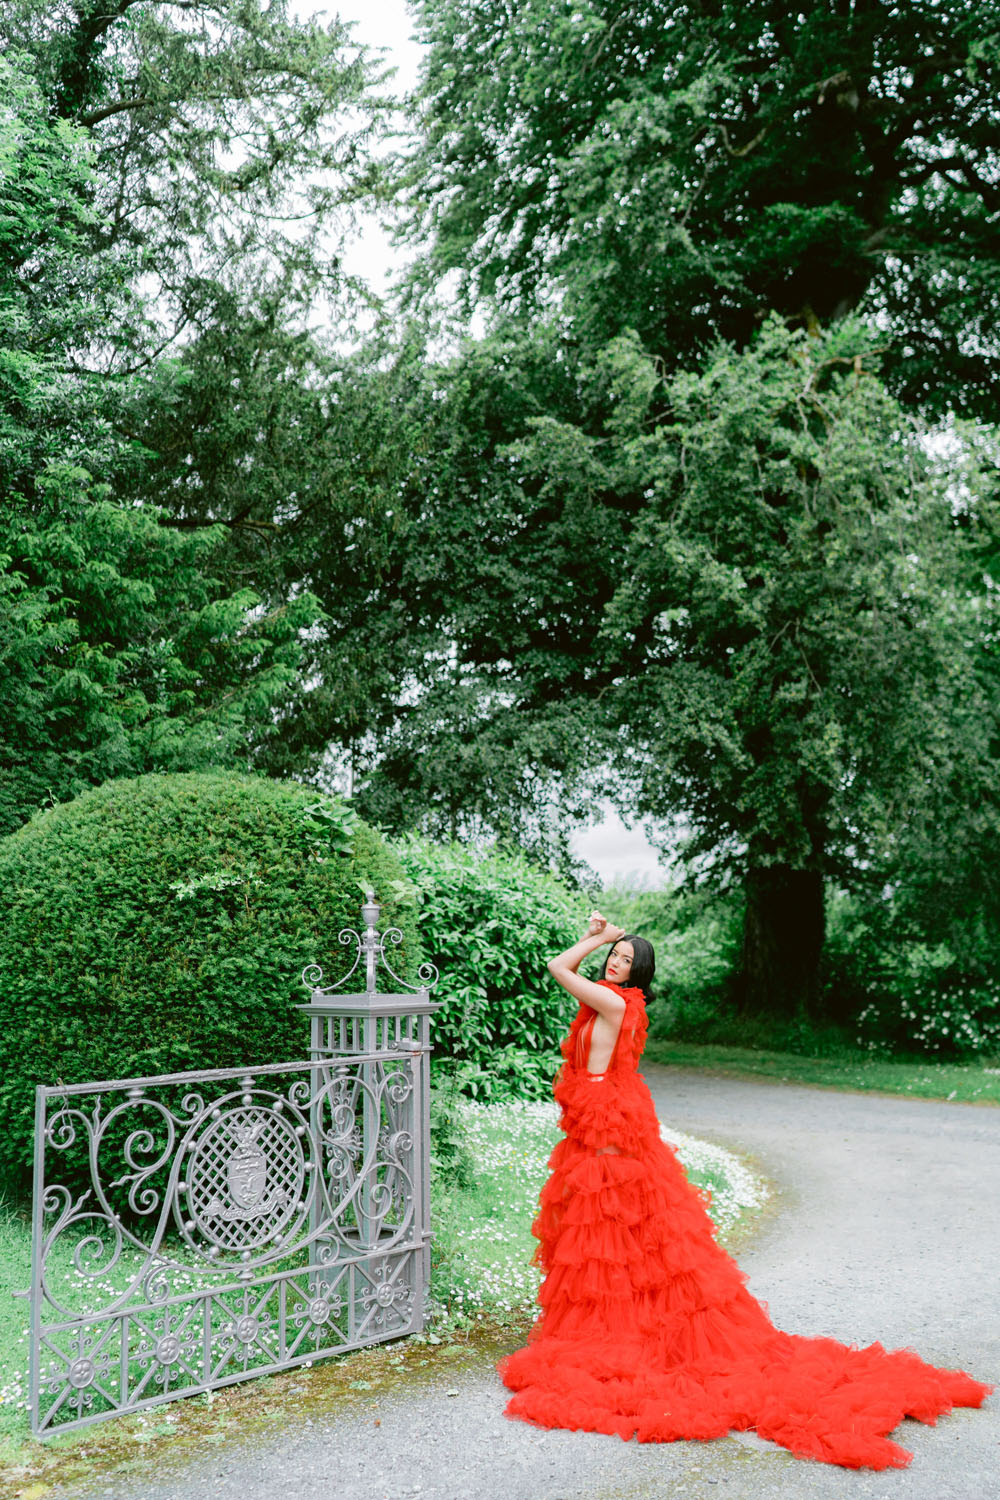 Glamorous Valentine's Day wedding ideas with a red wedding dress